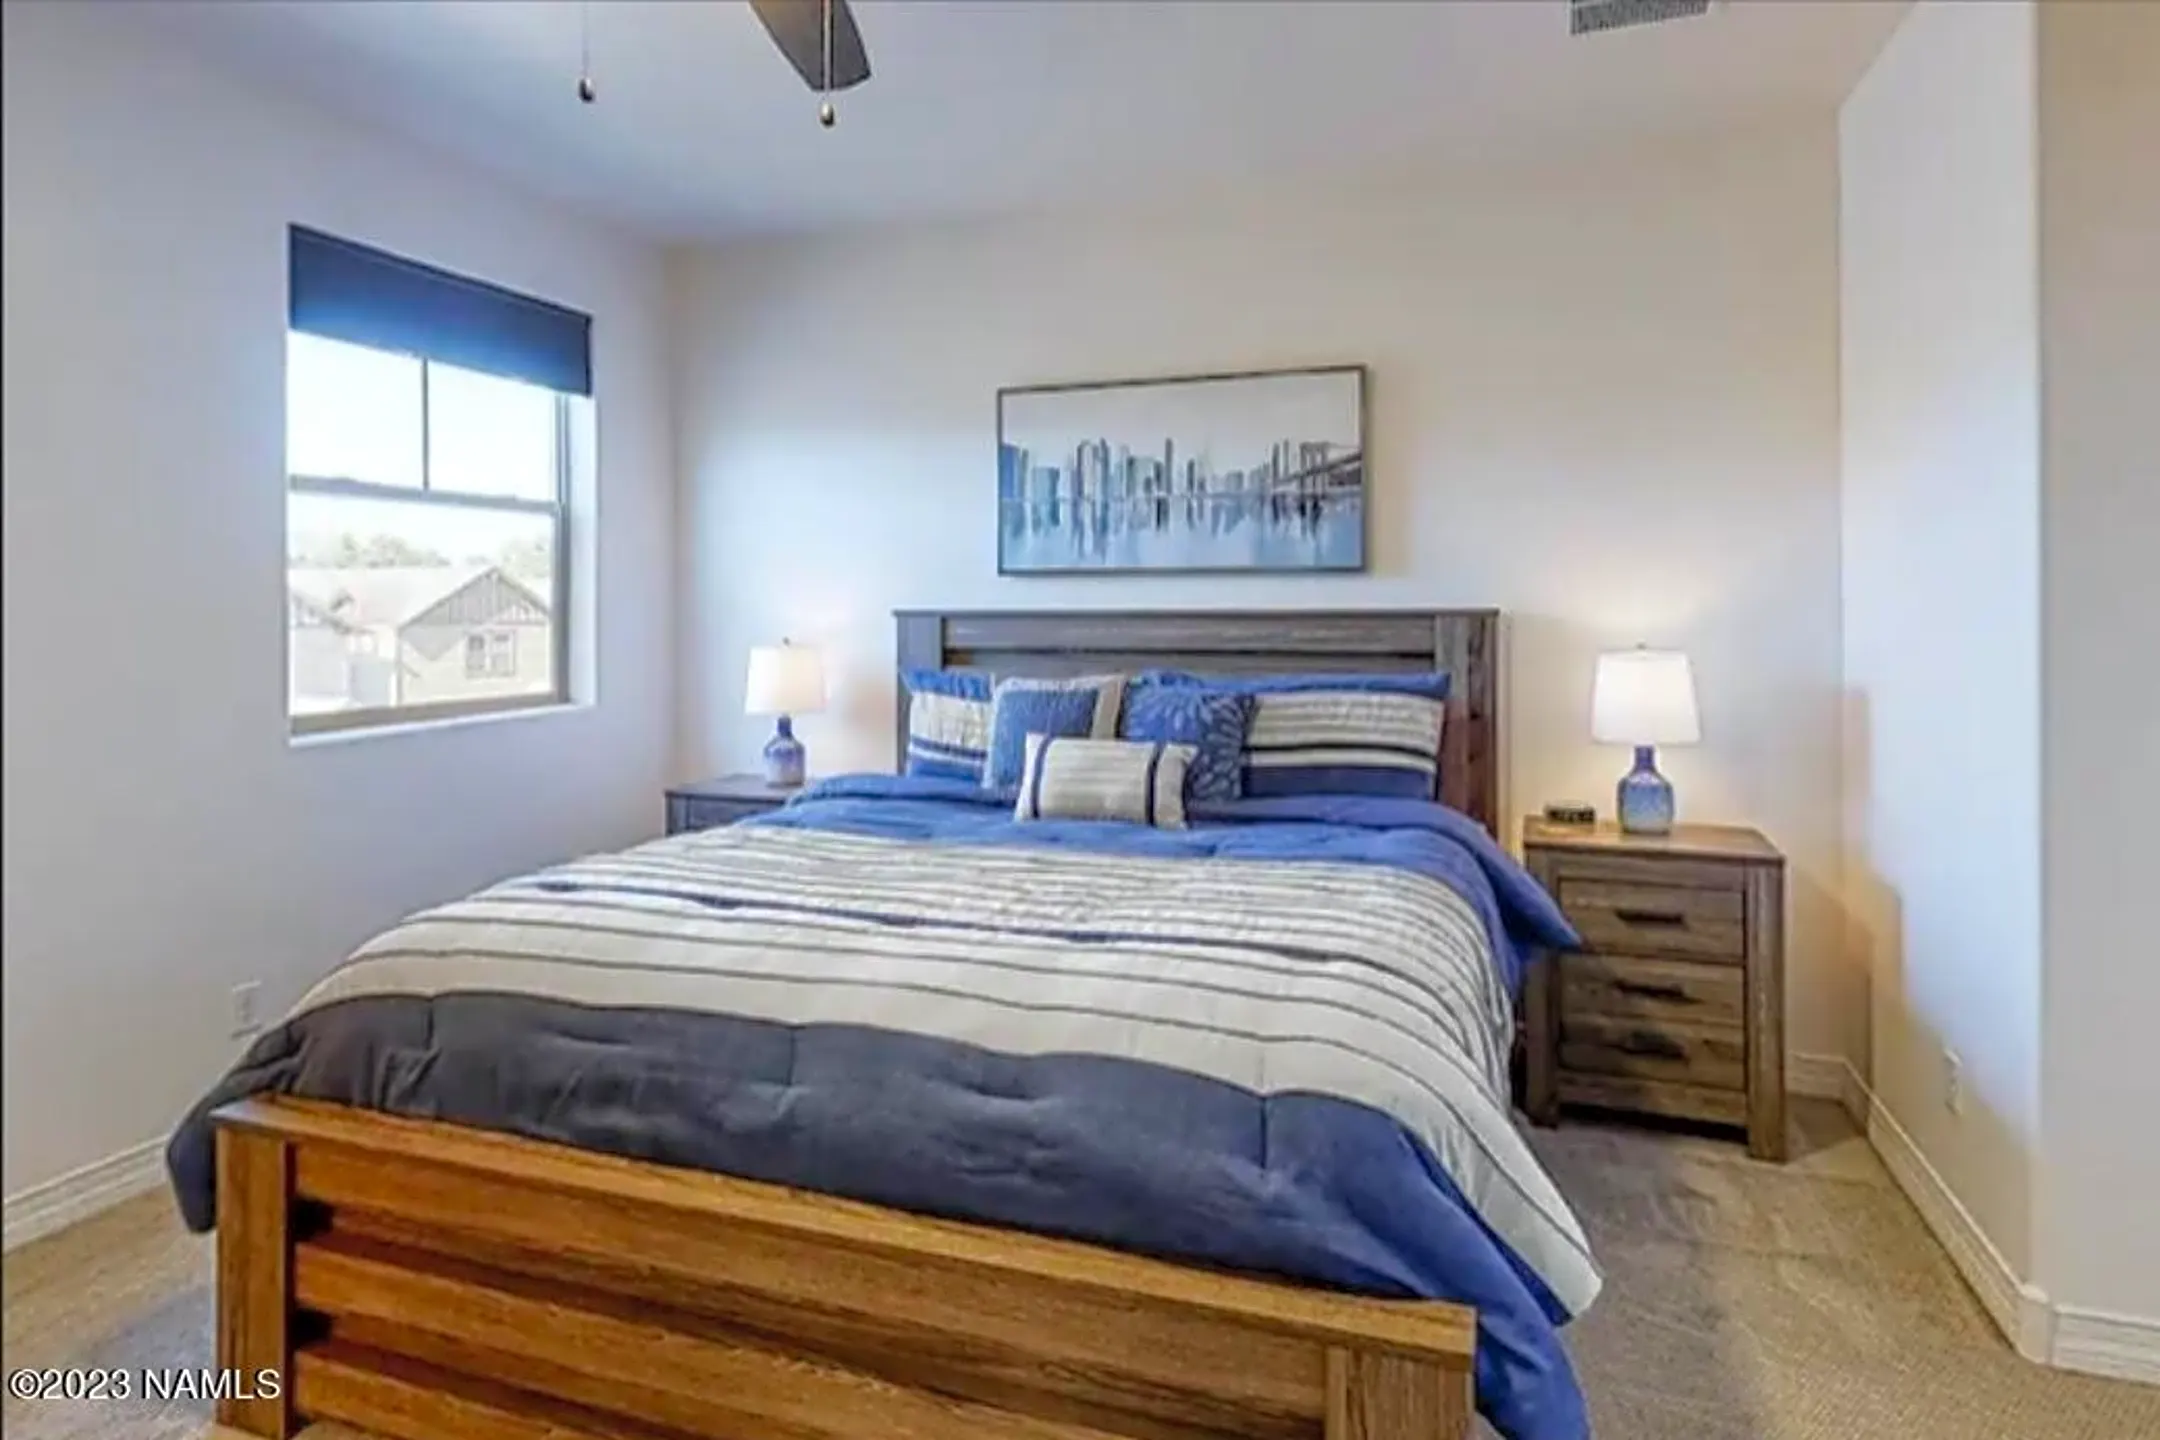 Bedroom - 2437 W Mission Timber Cir - Flagstaff, AZ